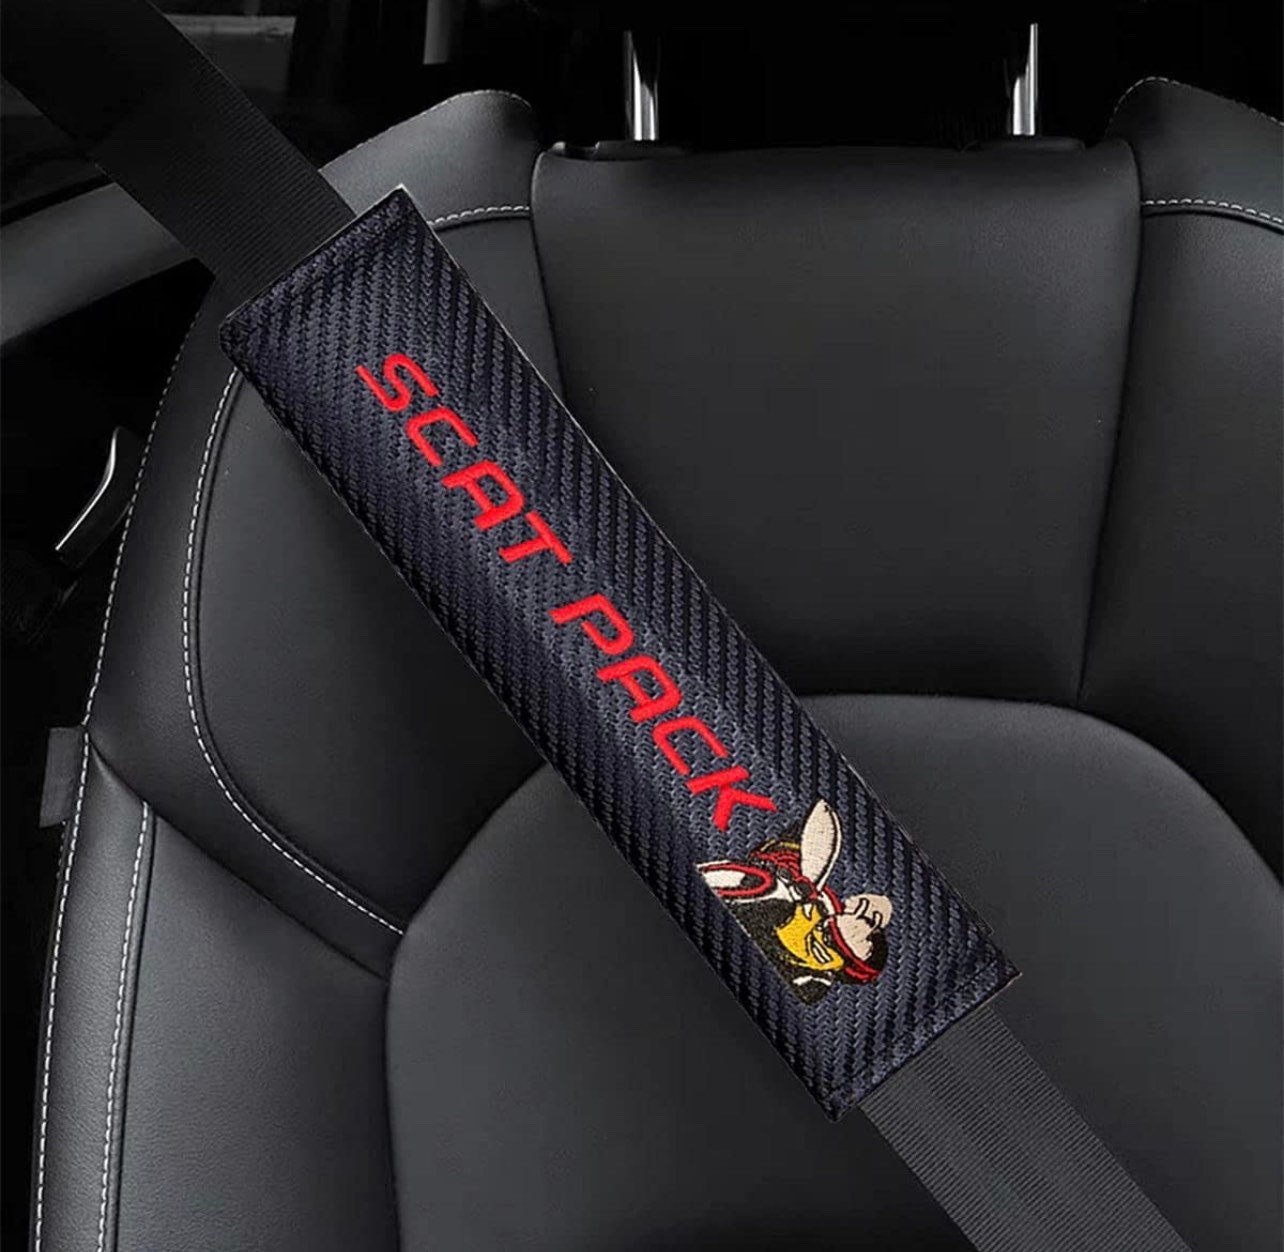 Buy CARIZO 2Pcs Seat Belt Shoulder Pads for Comfort, Embroidered